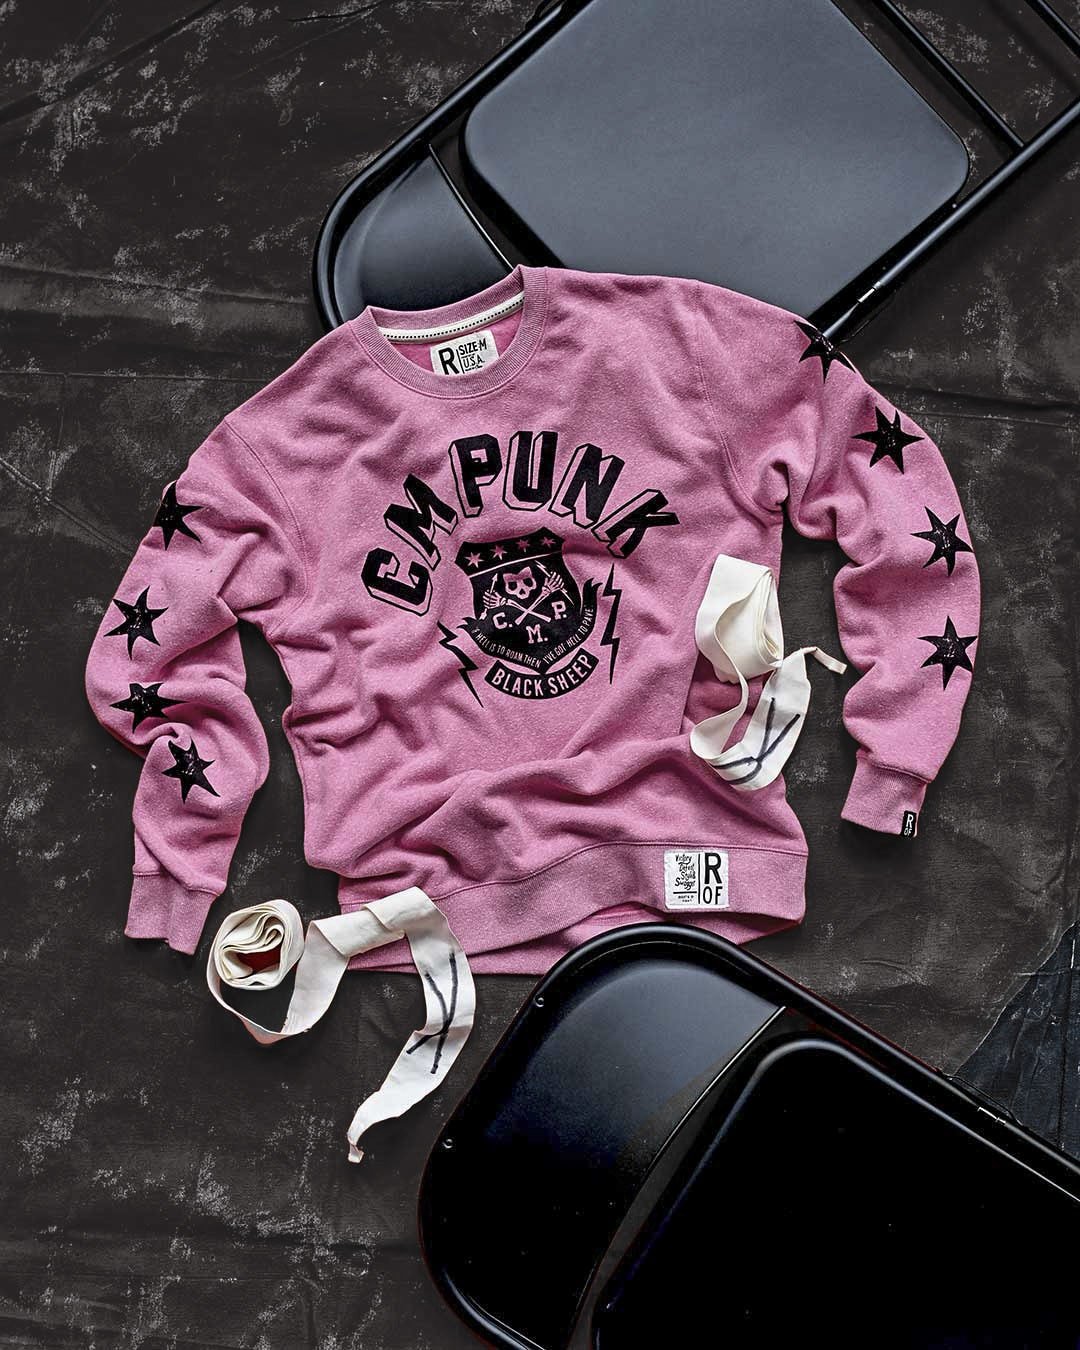 CM Punk 'Black Sheep' Pink Sweatshirt - Roots of Fight